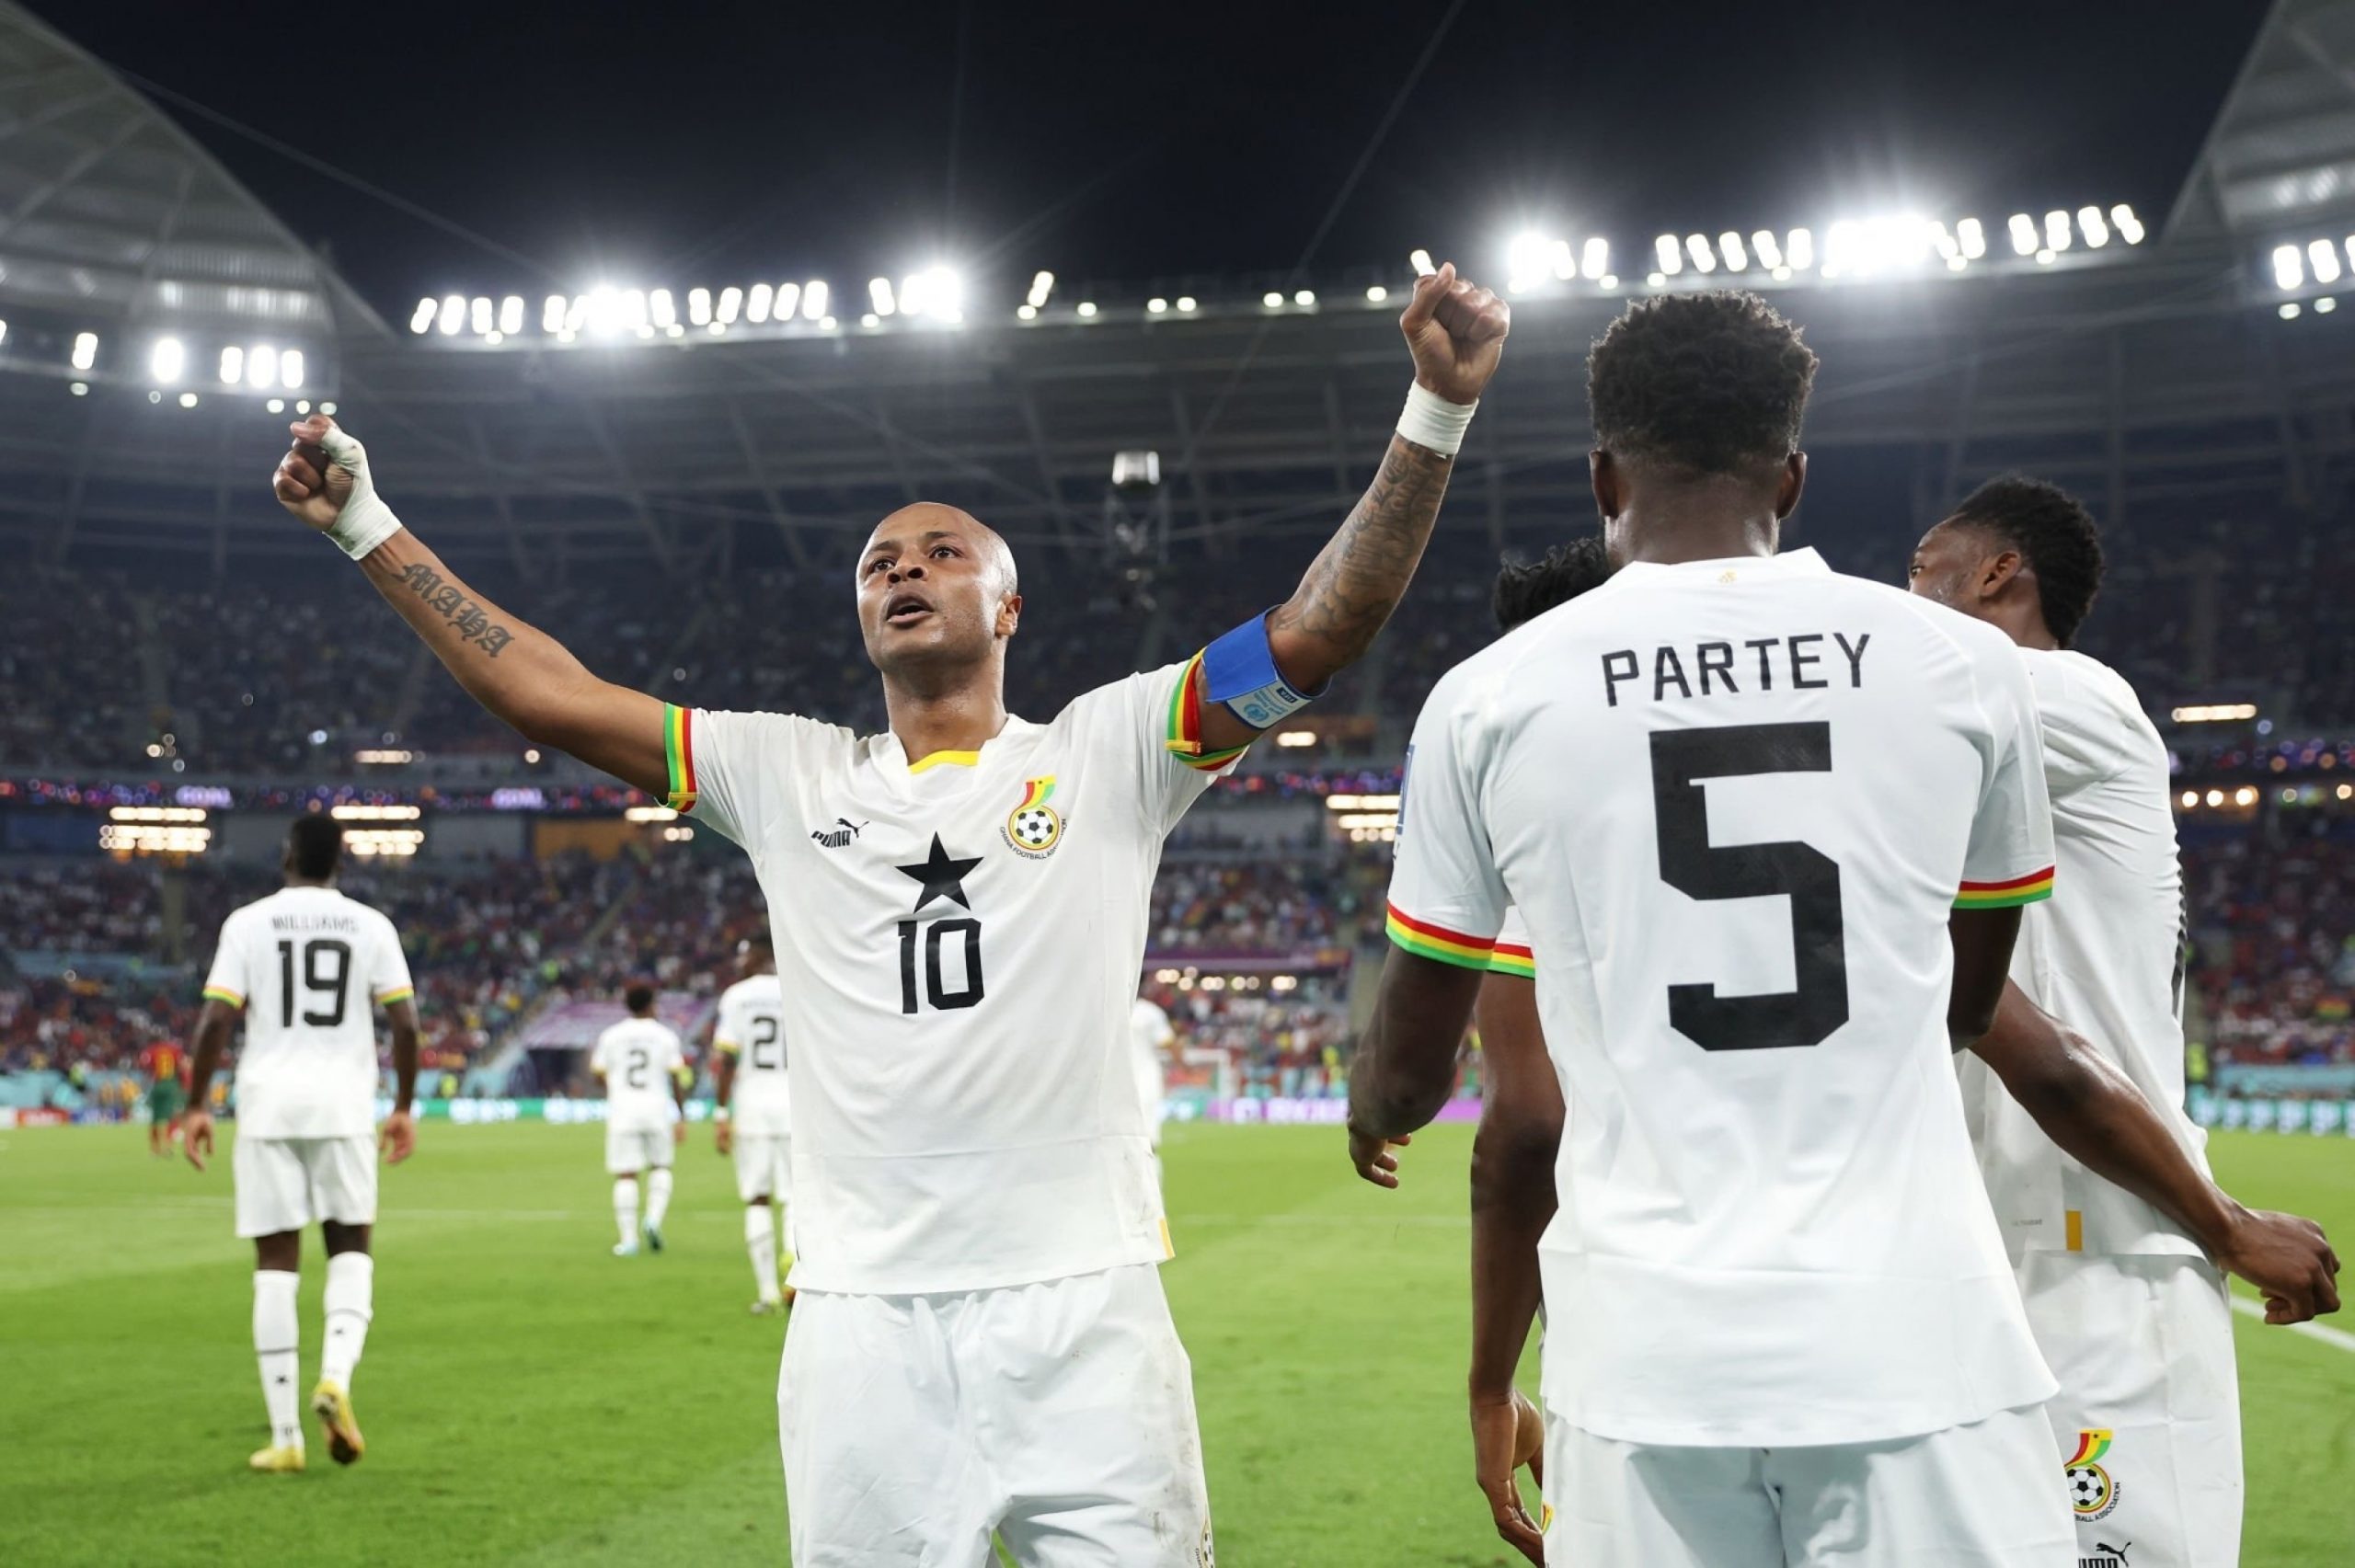 Portugal hang on for 3-2 win despite spirited Black Stars display